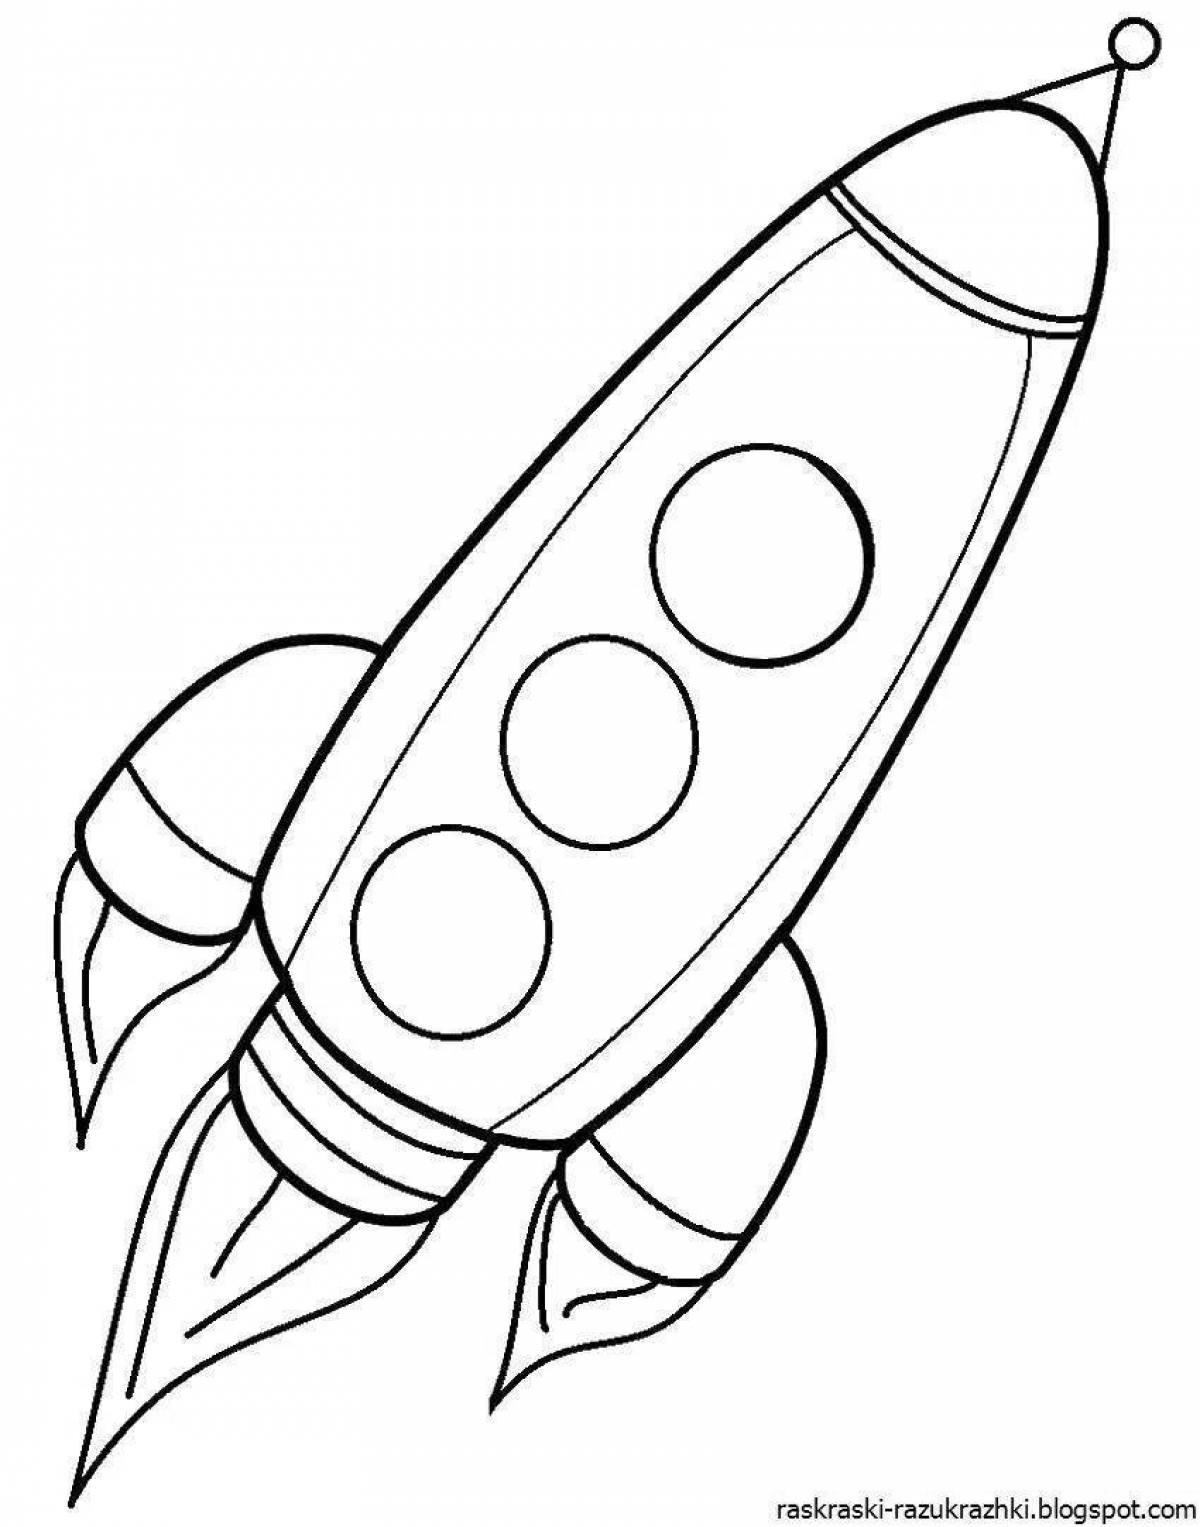 Nice rocket coloring book for kids